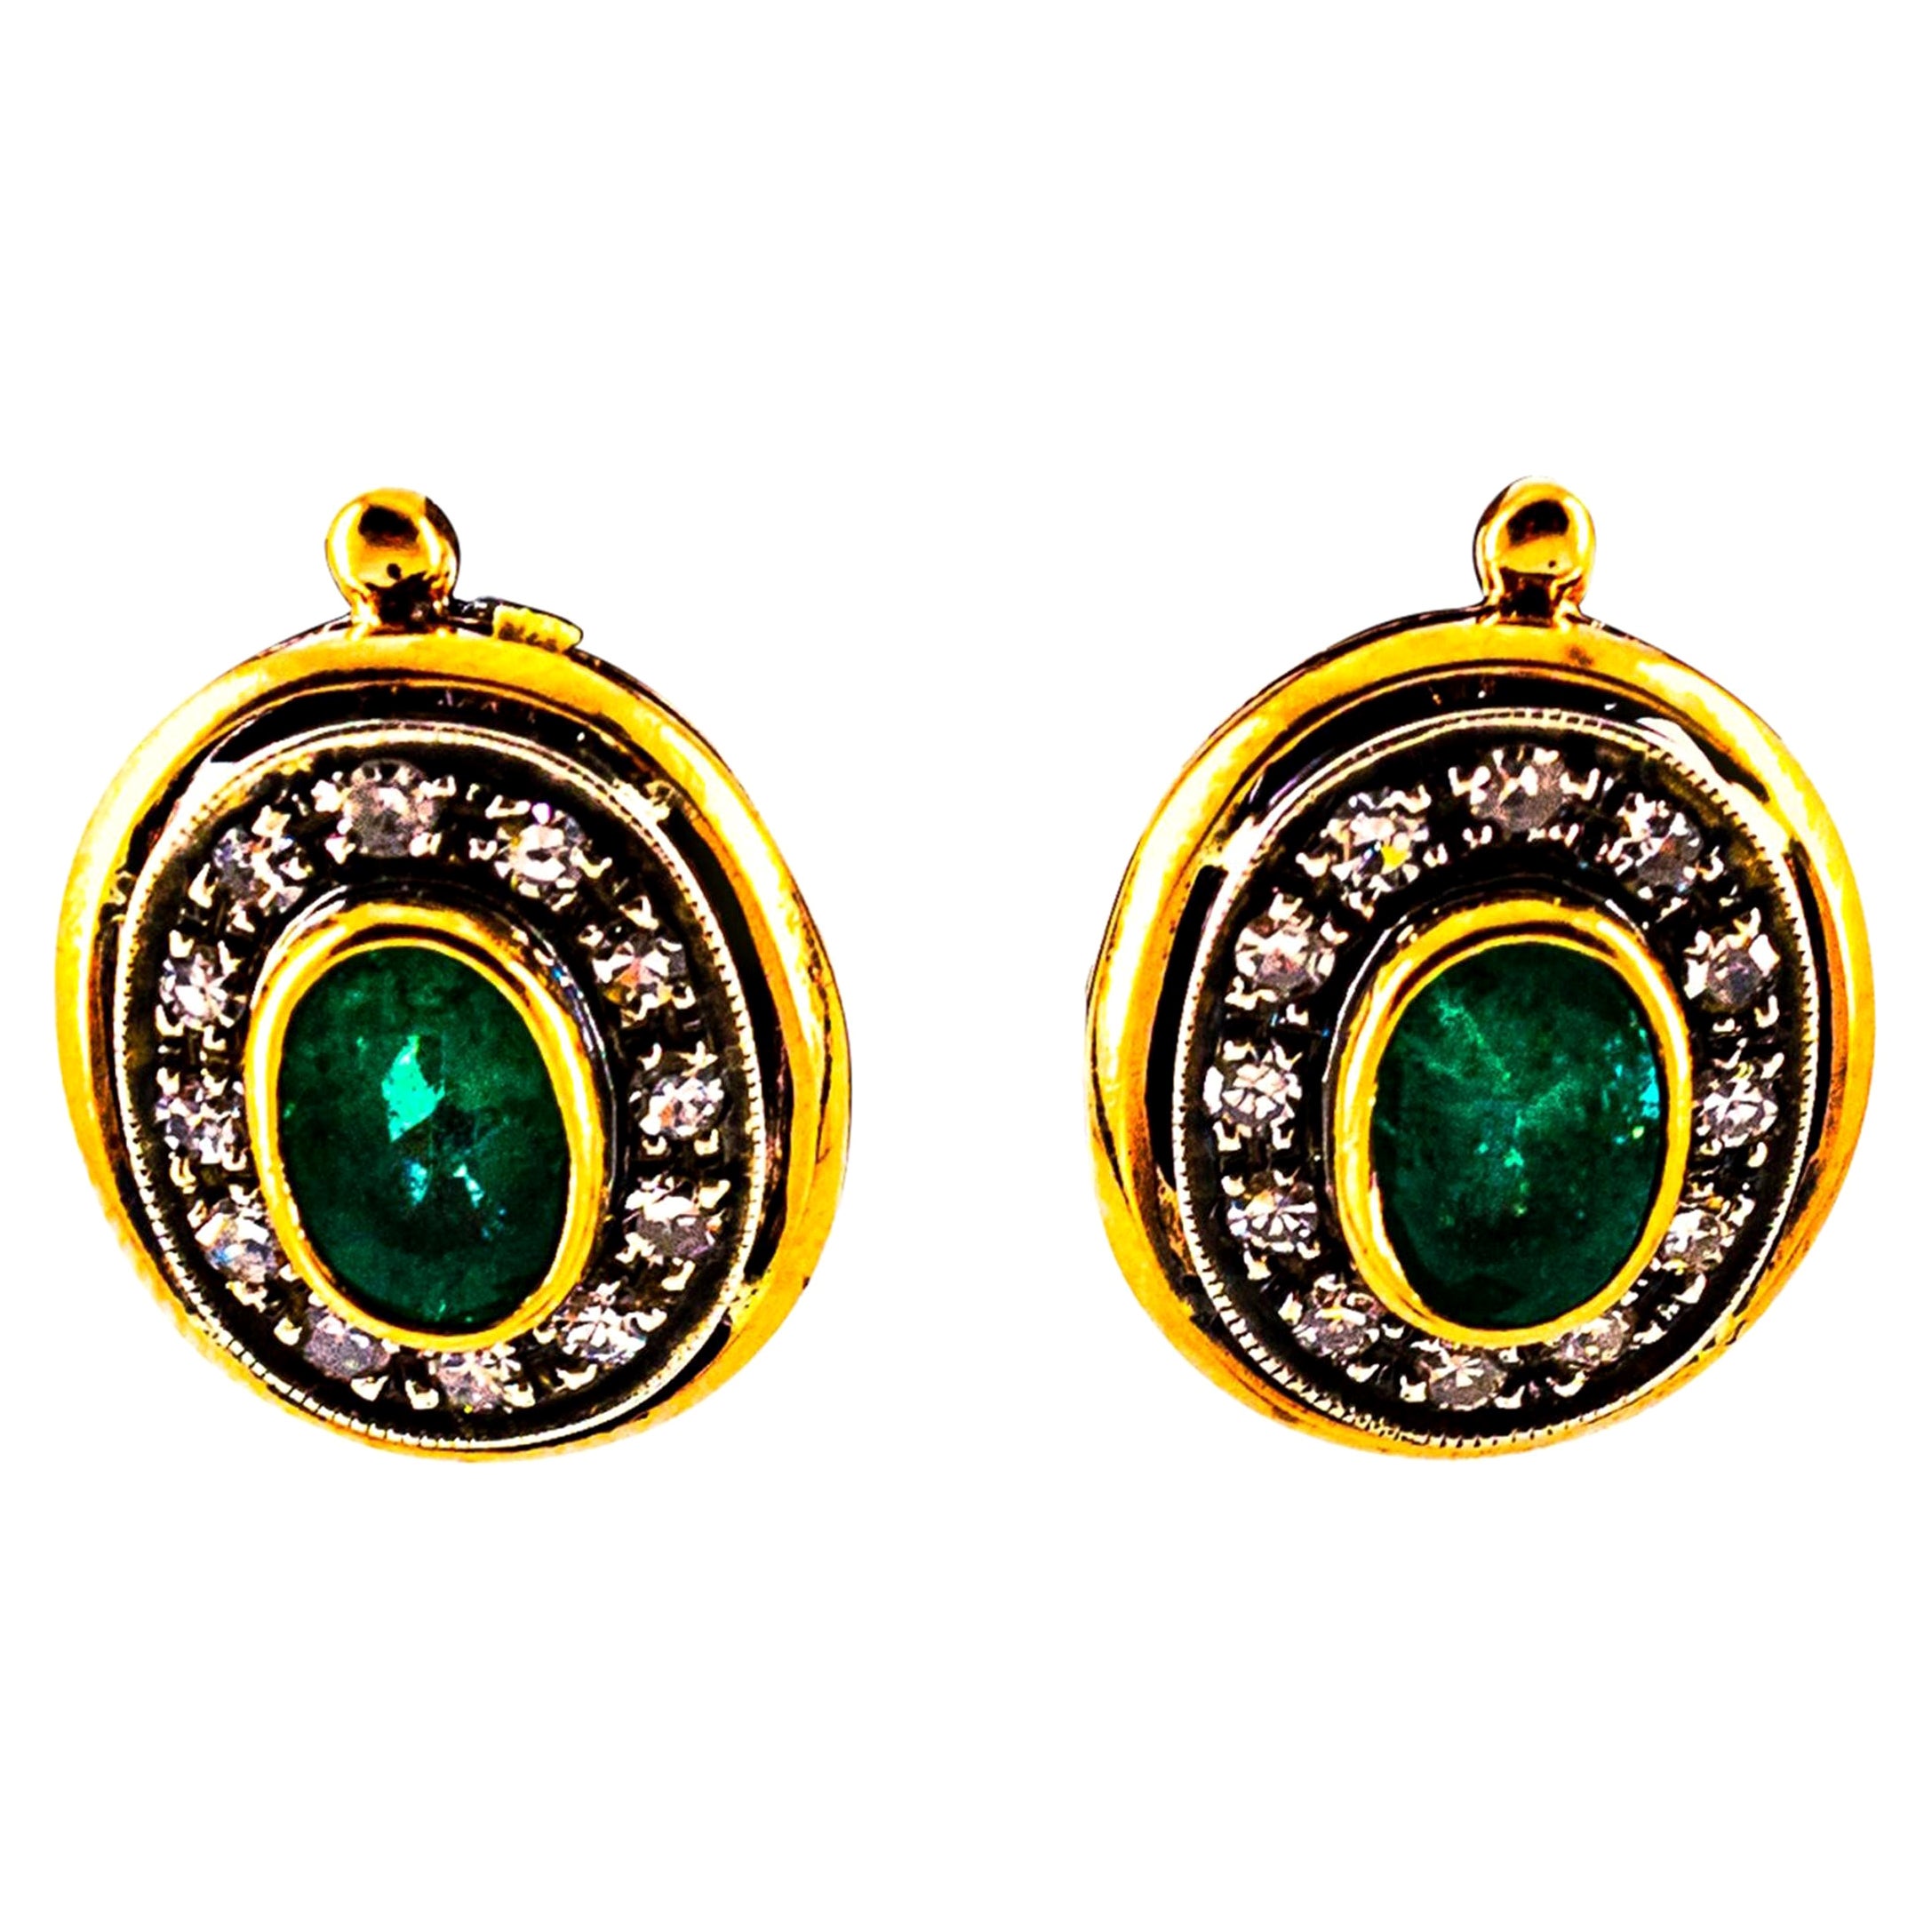 2.15 Carat White Diamond Oval Cut Emerald Yellow Gold Lever-Back Dangle Earrings